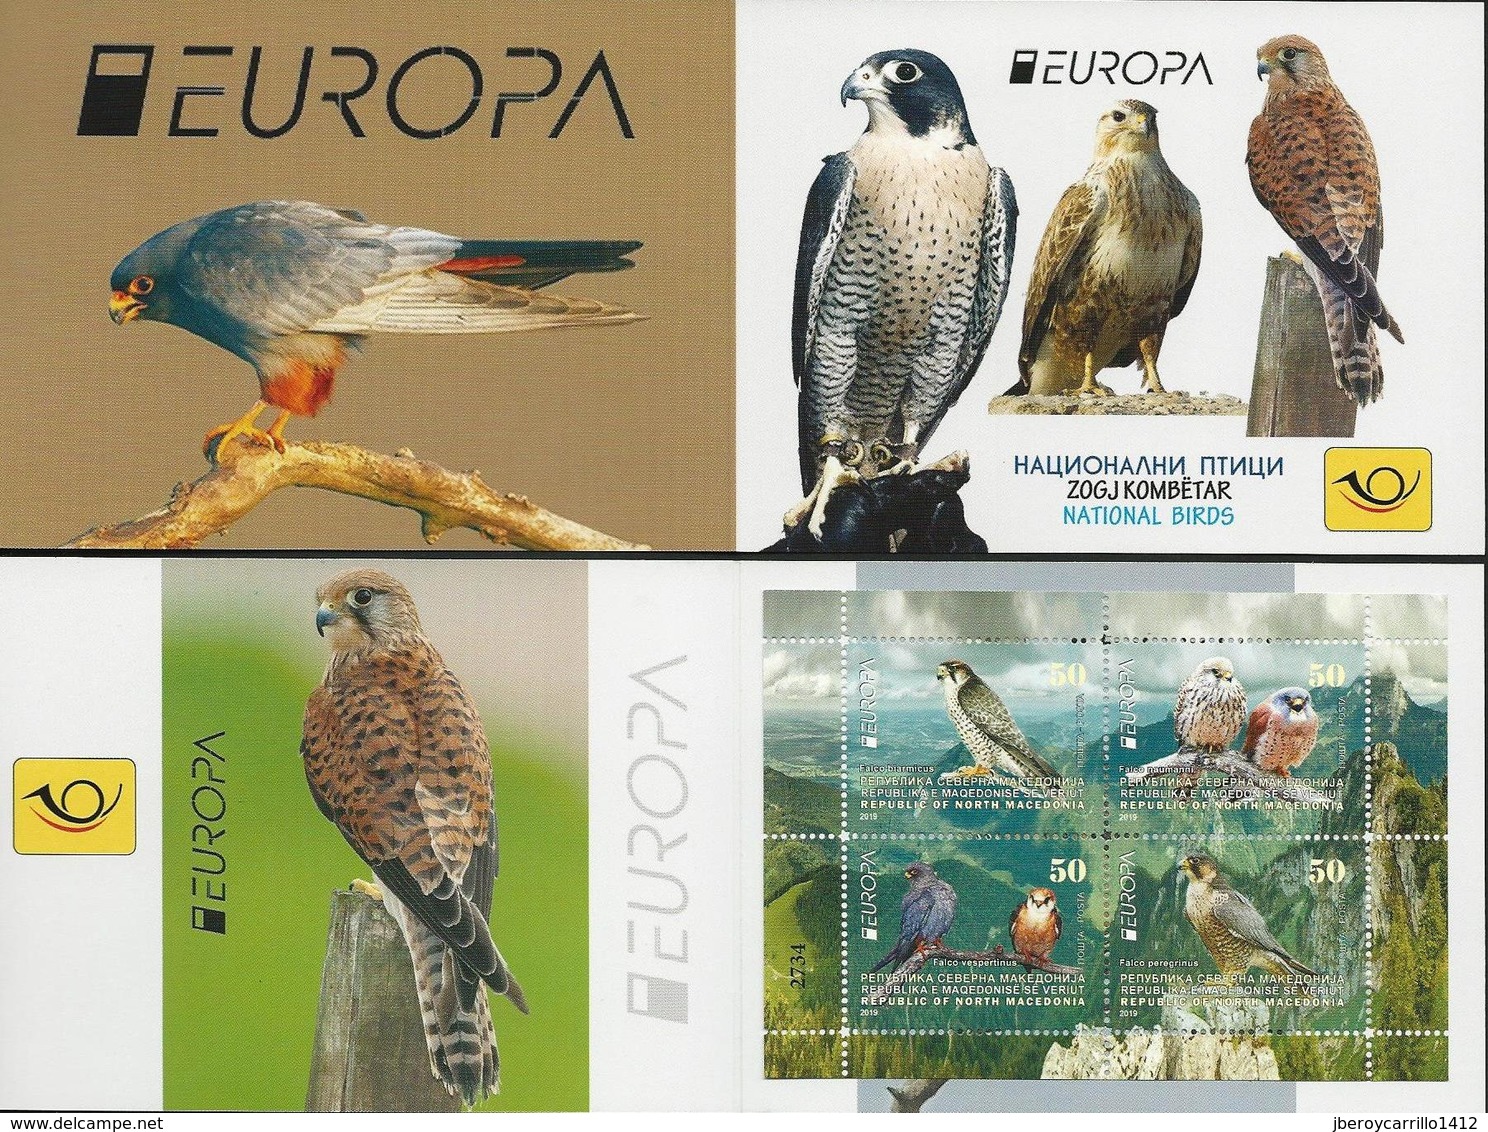 MACEDONIA /NORTH-MACEDONIA /MAKEDONIEN -EUROPA 2019 -NATIONAL BIRDS.-"AVES -BIRDS -VÖGEL-OISEAUX"- CARNET - 2019